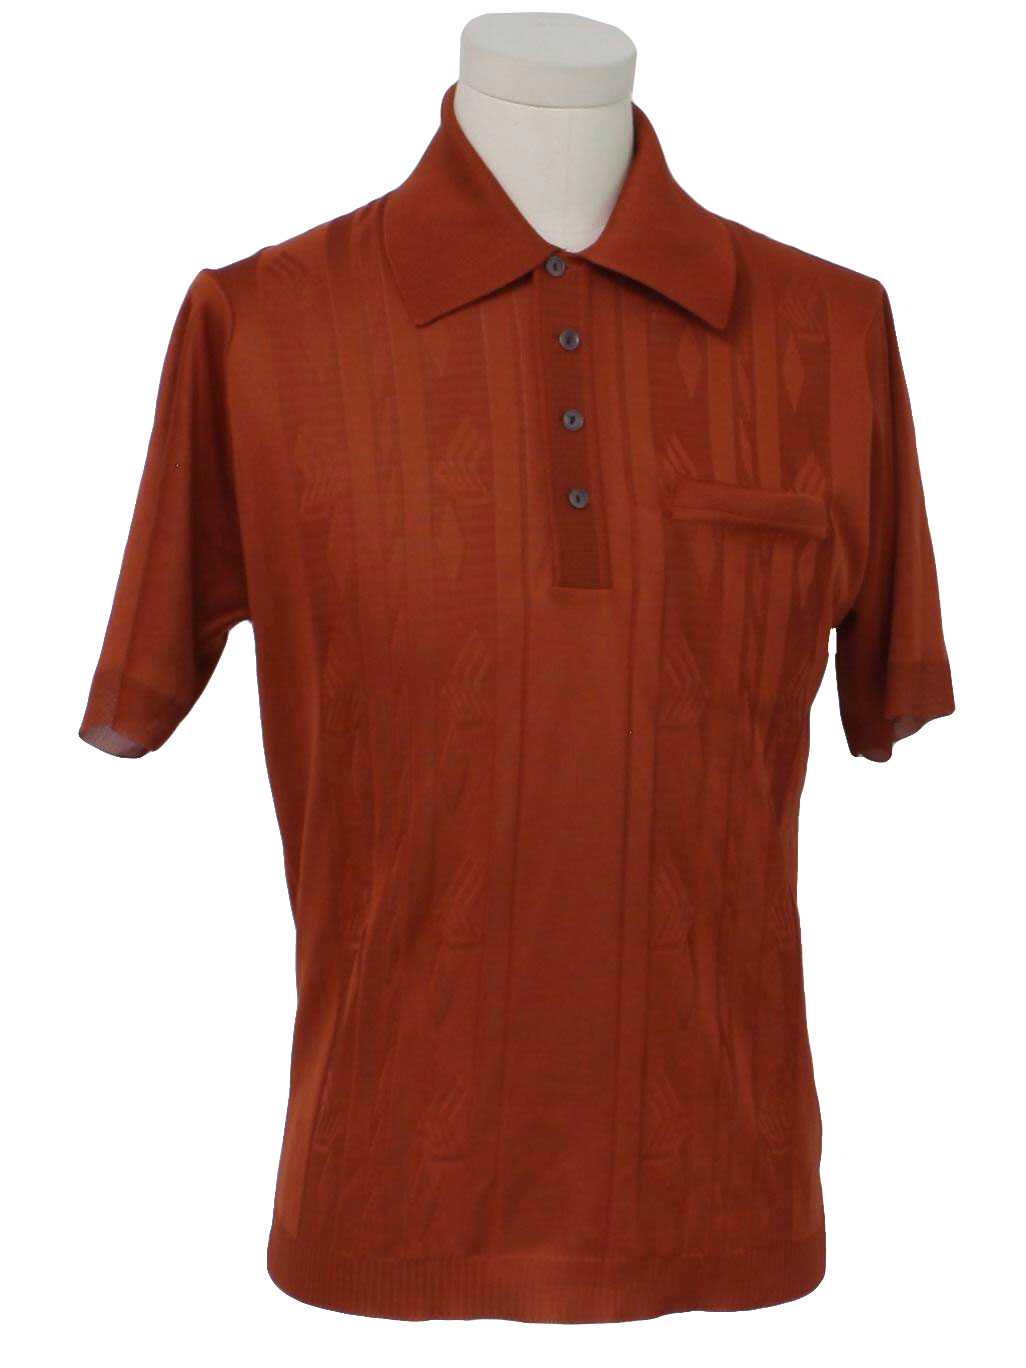 Vintage 70s Knit Shirt: 70s -Label Missing- Mens cinnamon spice ...